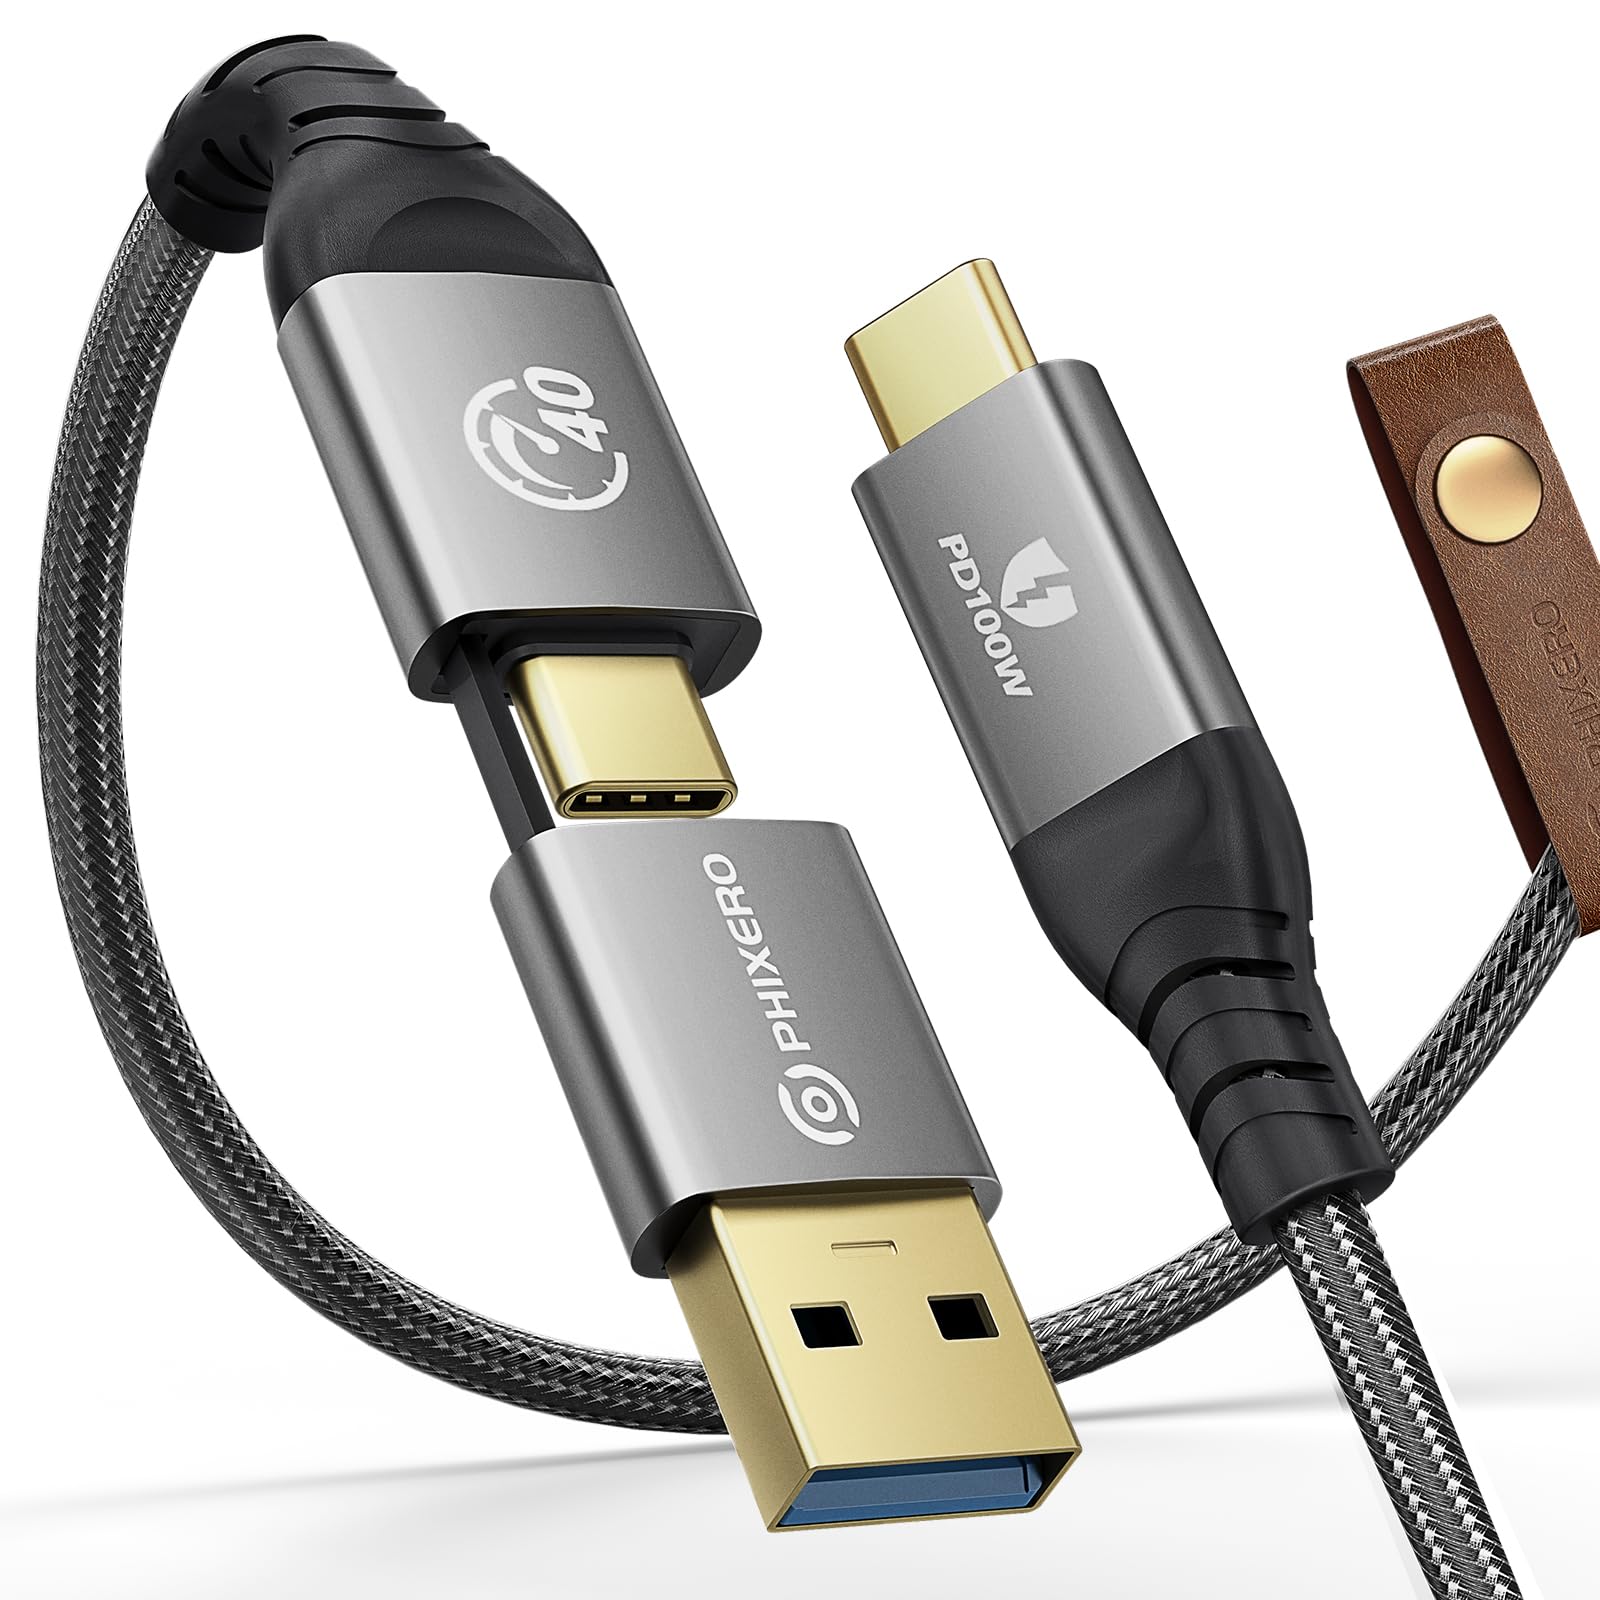 PHIXERO für Thunderbolt 4 Kabel 0.5M, 40Gbps Datentransfer/ 8 K@60 Hz Videoausgang/ 100W USB-C auf USB-C Ladekabel, 2 in 1 USB-A/C Kompatibel mit USB 4, Thunderbolt 3, MacBook, Docking, eGPU